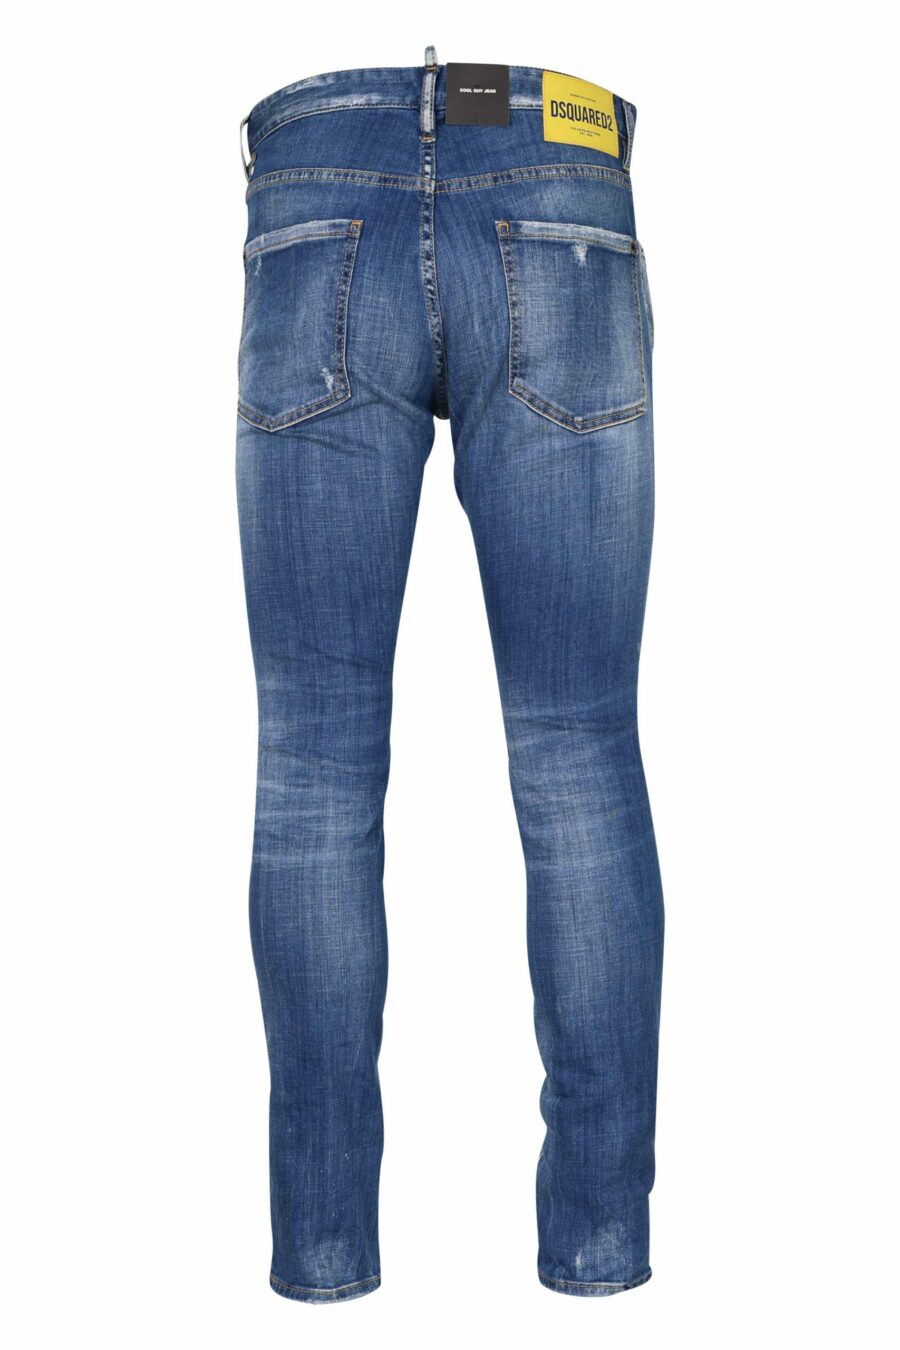 Pantalón vaquero azul claro "cool guy jean" con semirotos y semidesgastado - 8054148311414 2 scaled